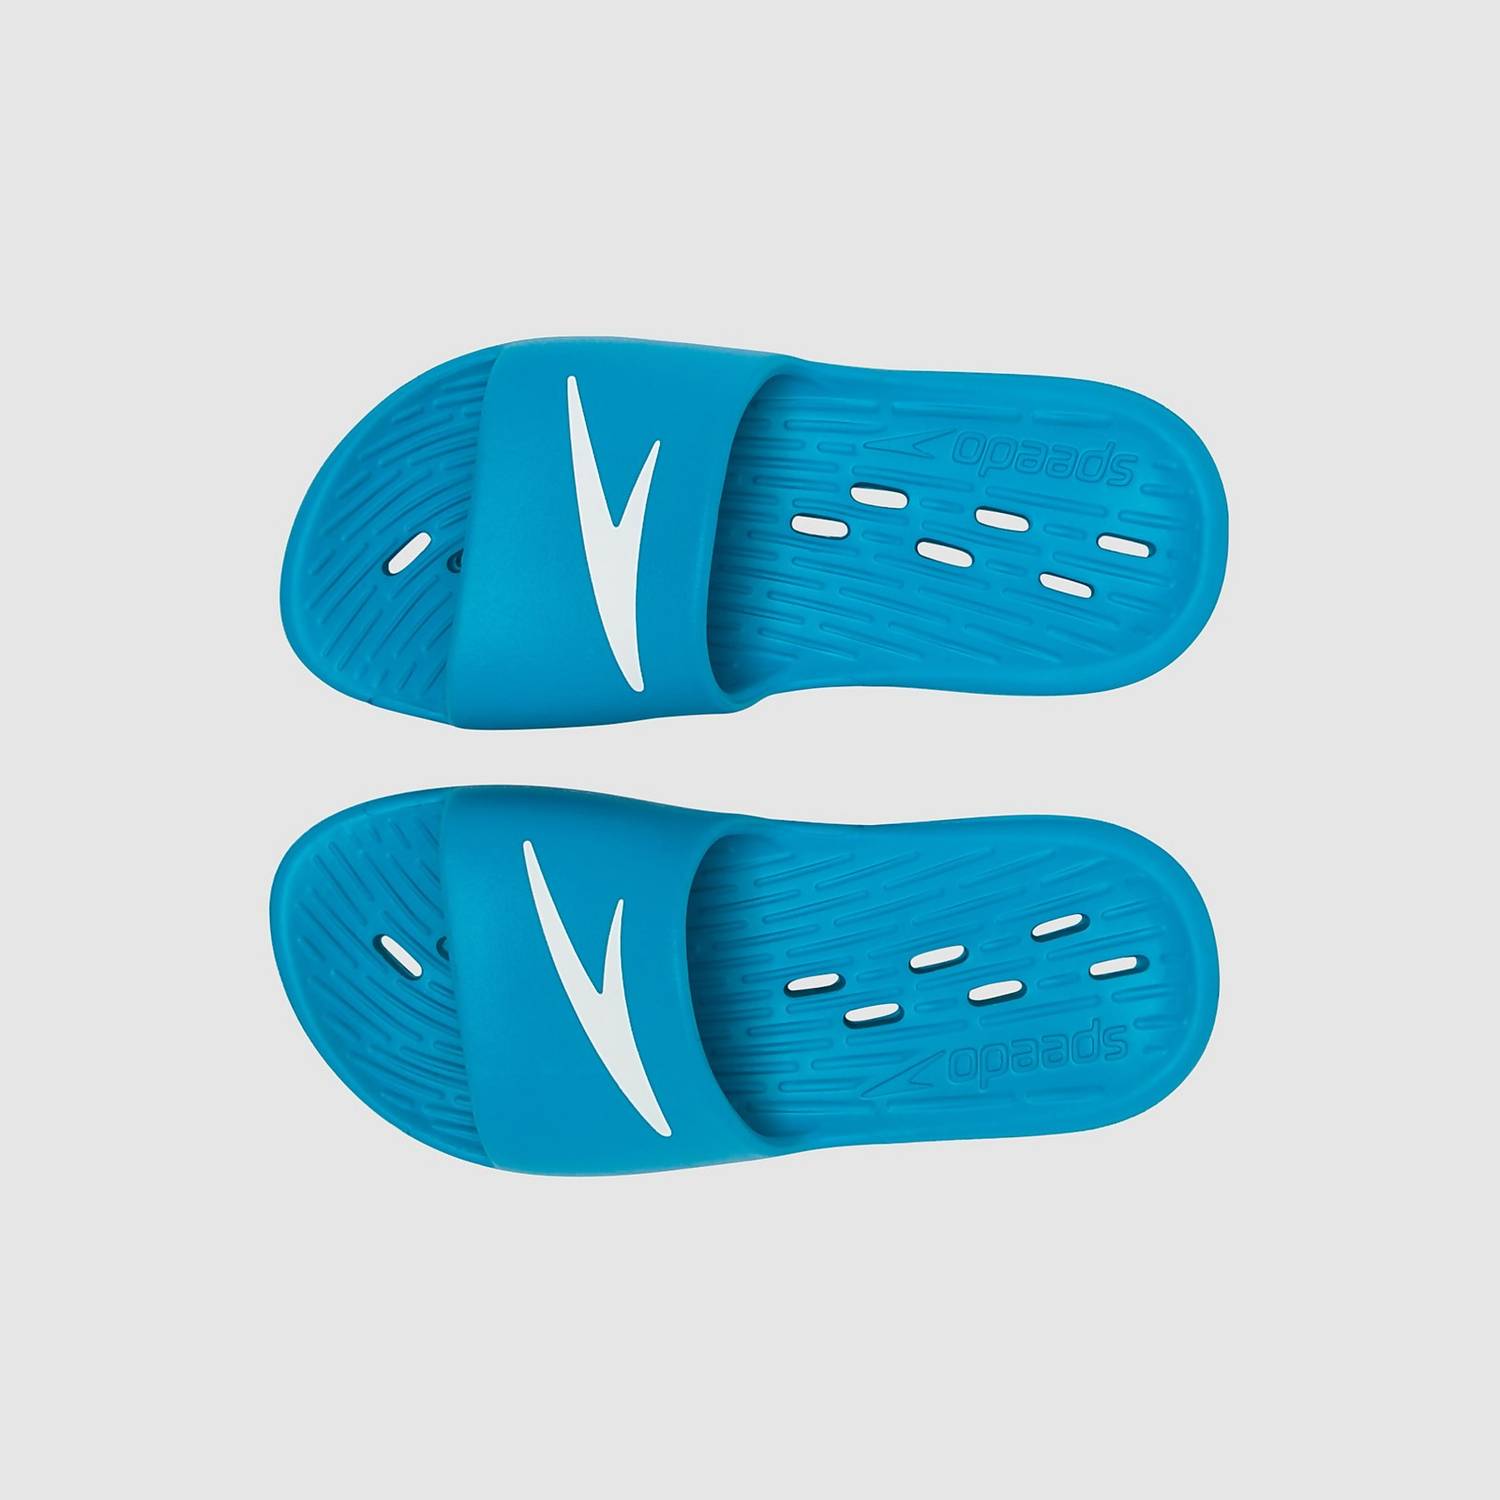 Chaussures Enfants Sandales De Piscine Junior Speedo Bleu Enfants – 1